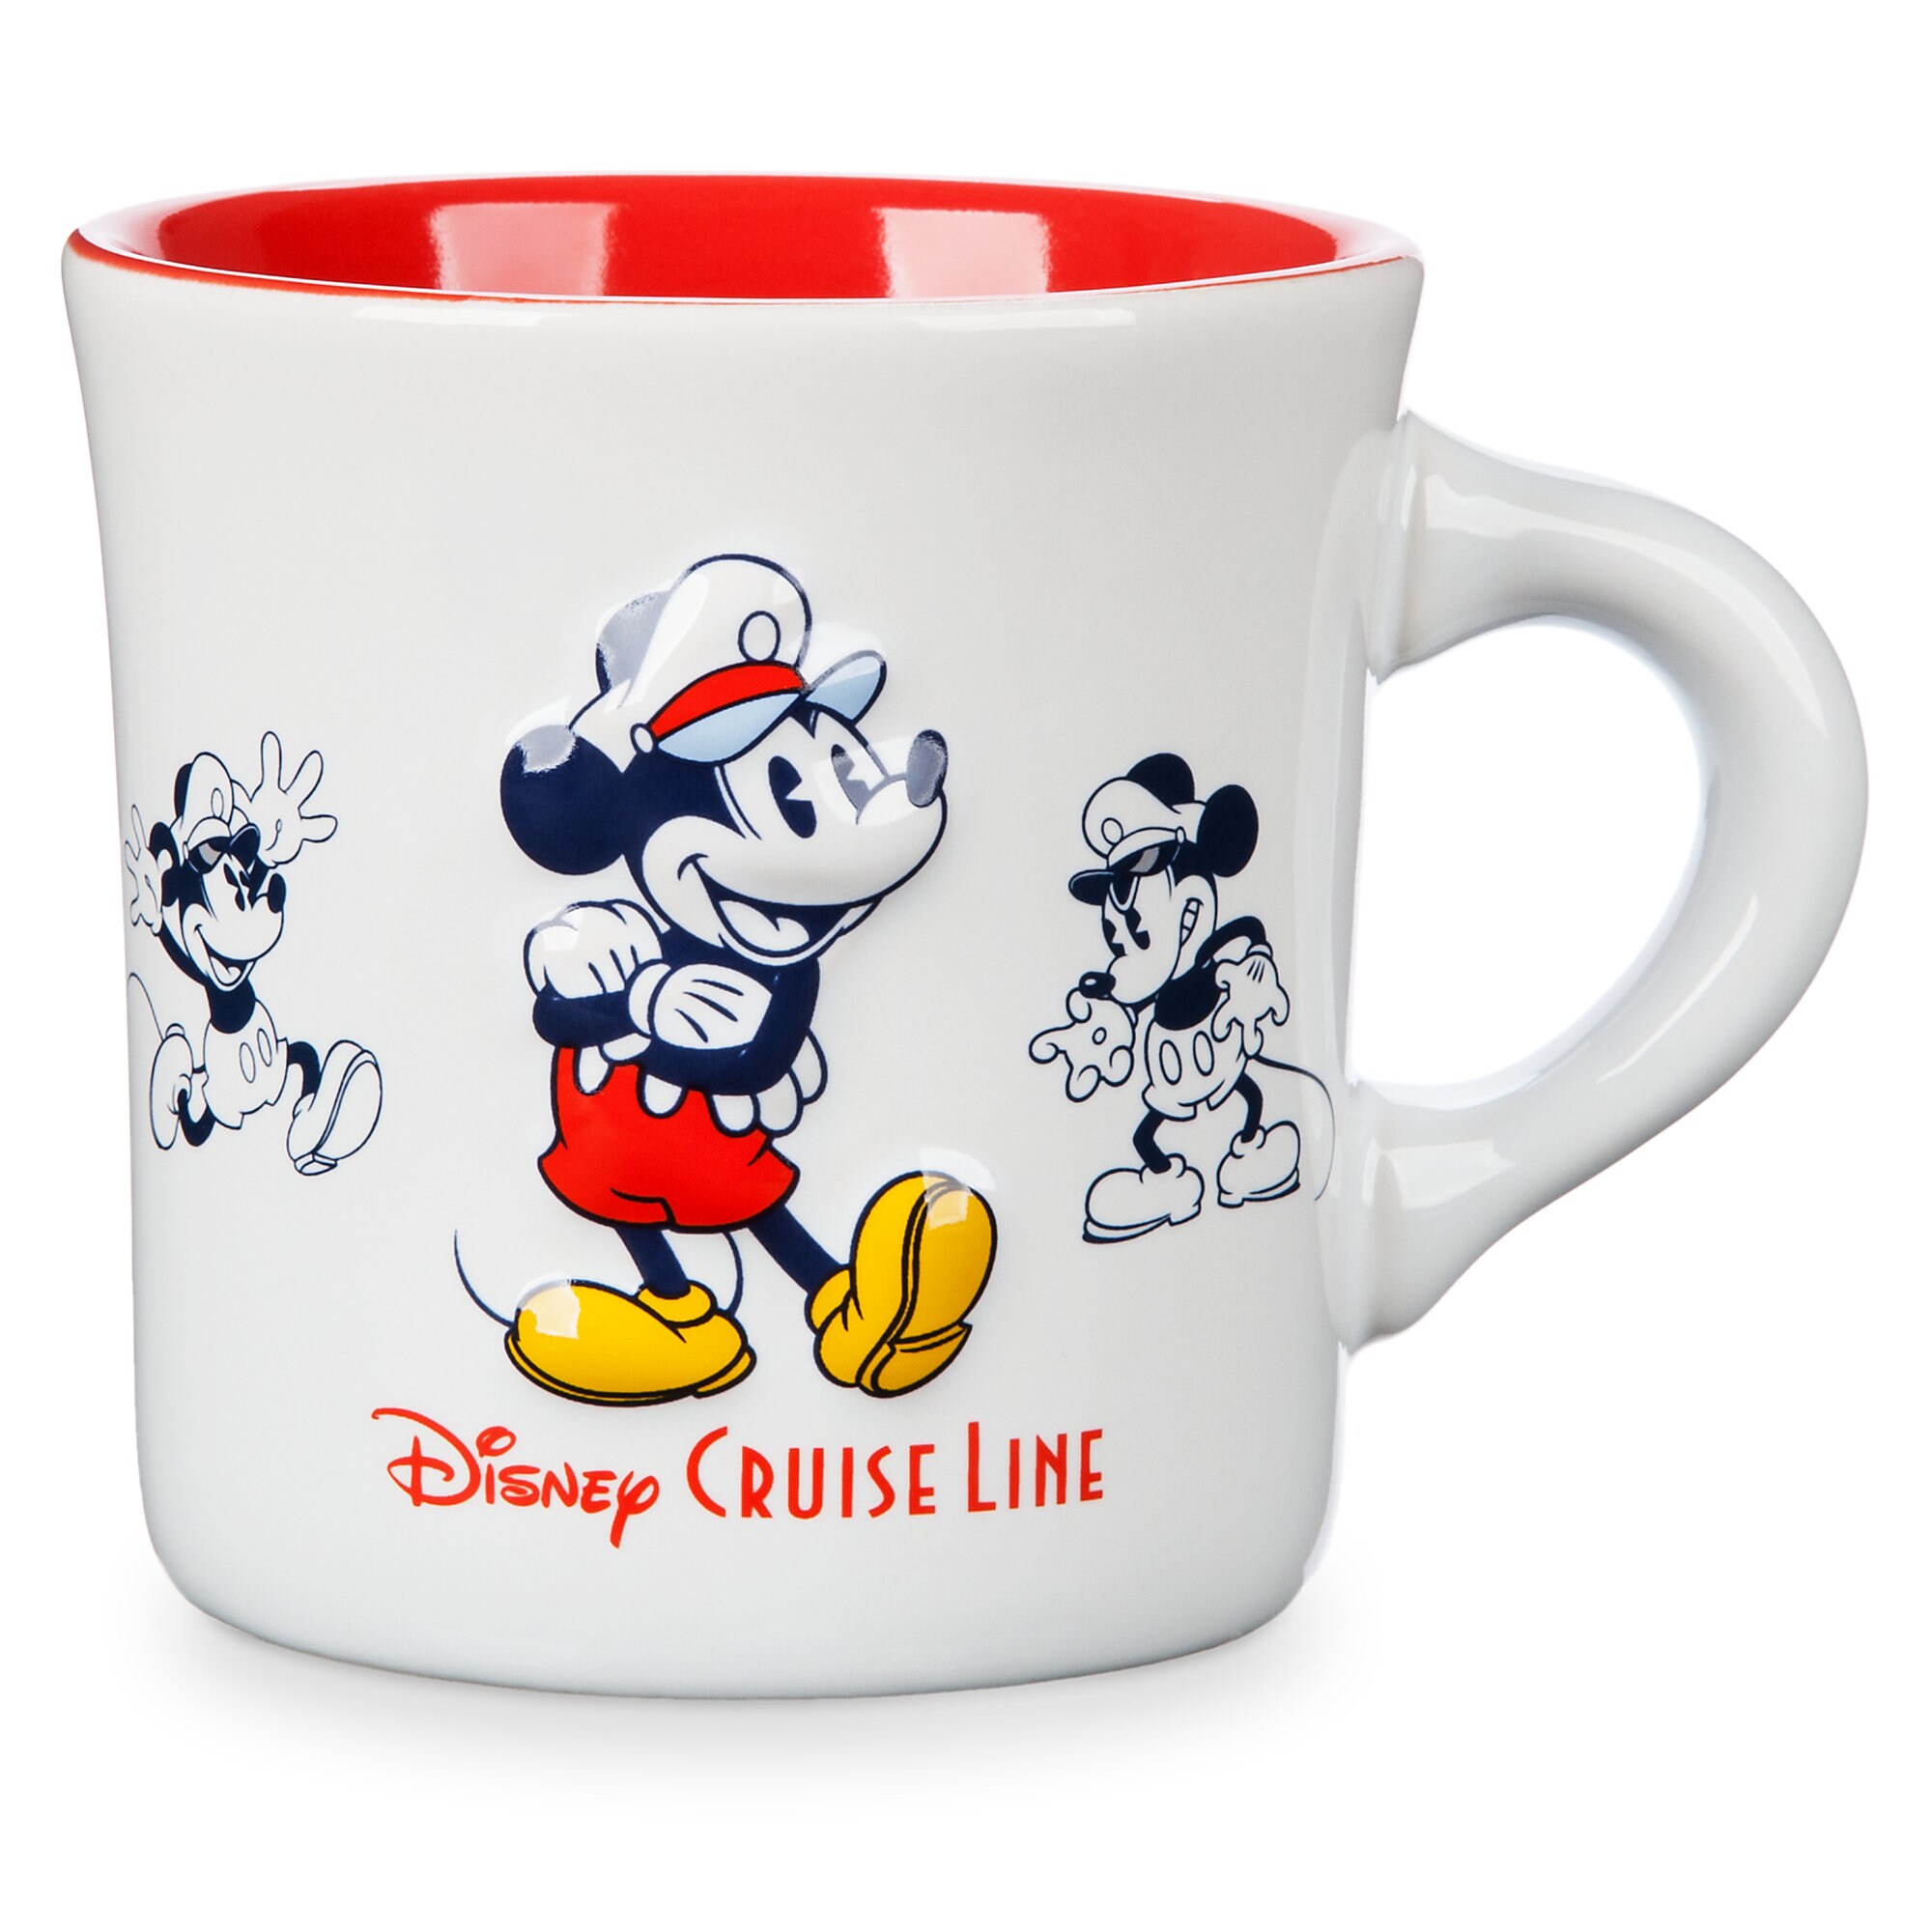 Mickey Mouse Diner Mug - Disney Cruise Line